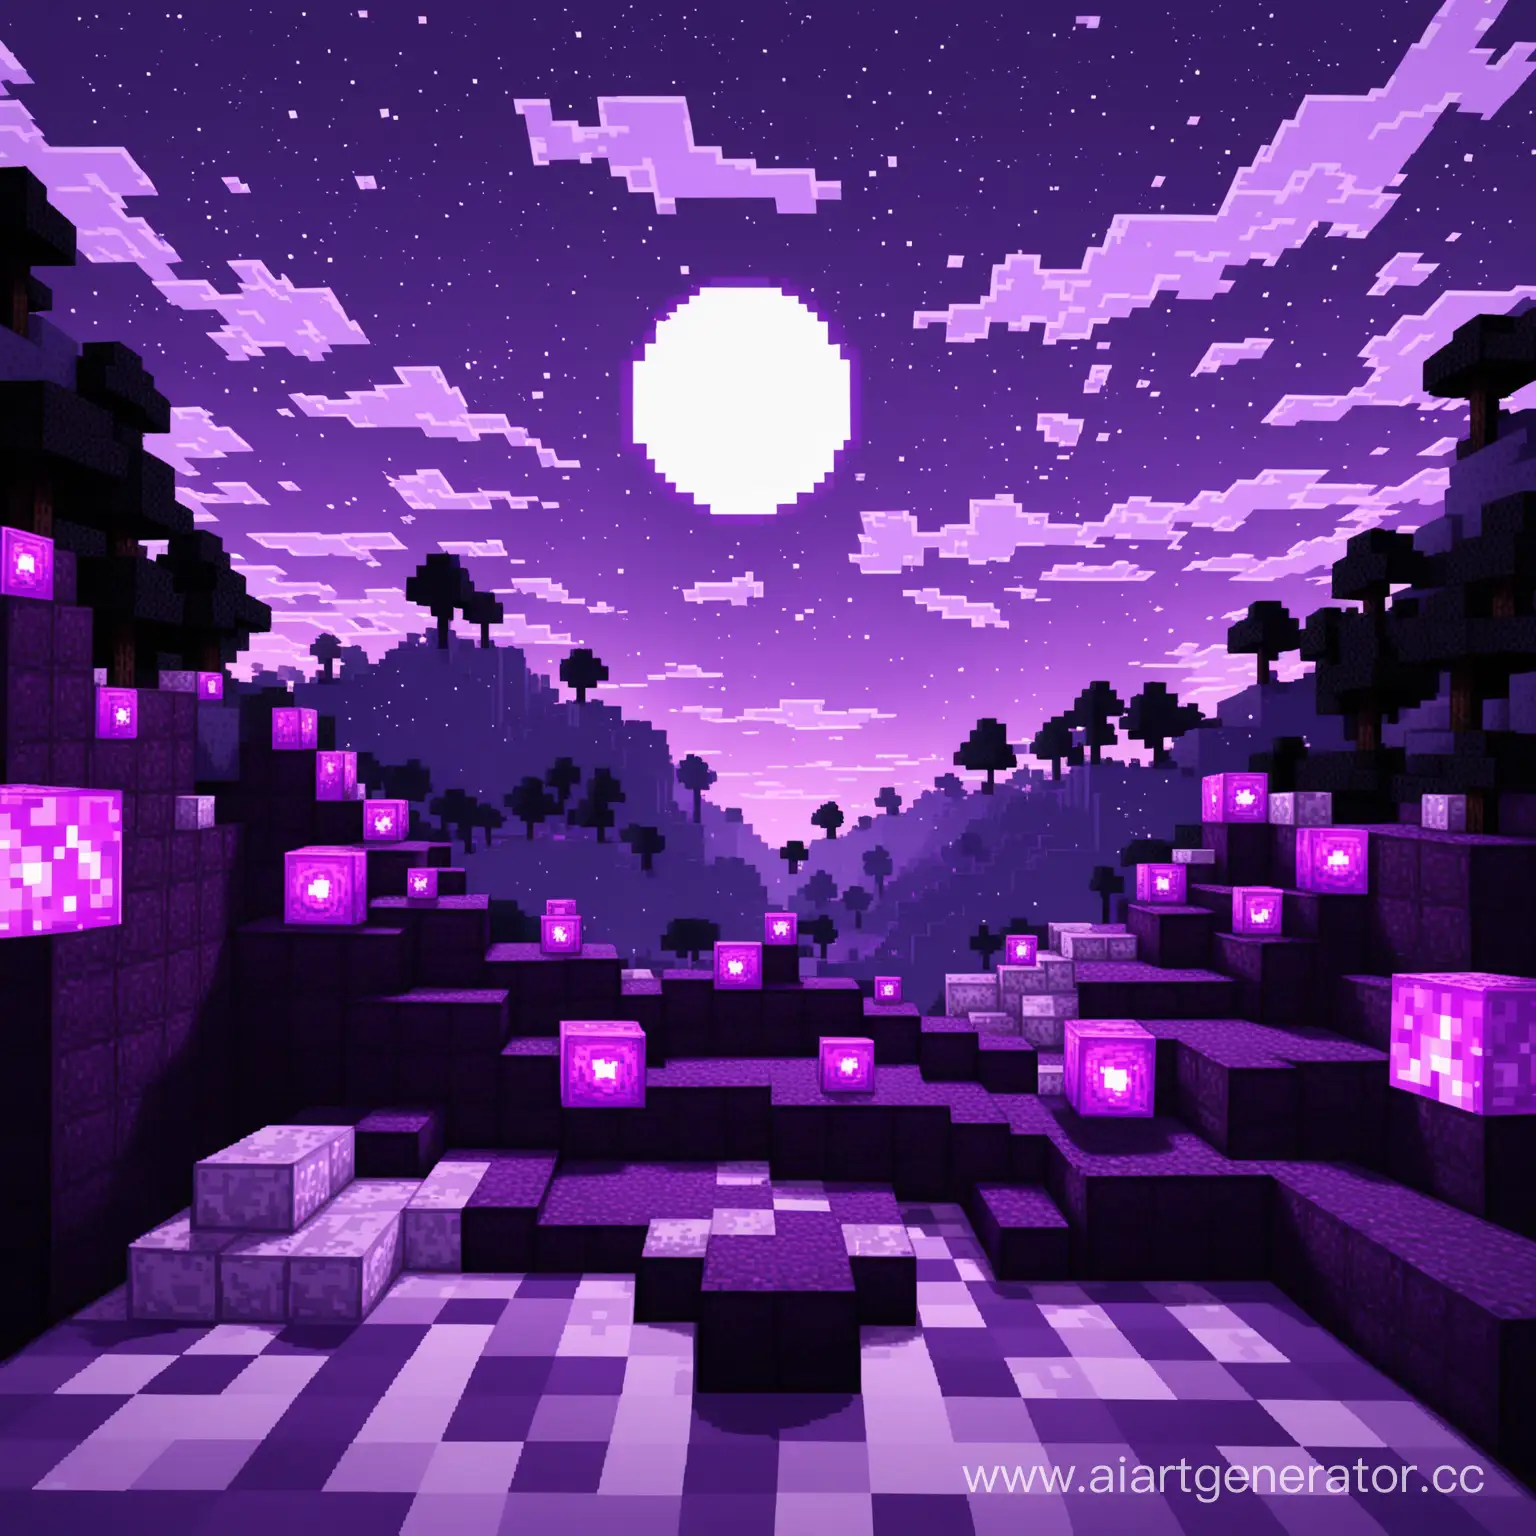 Minecraft-RetroPixel-Server-Loading-Screen-with-Purple-White-and-Black-Color-Scheme